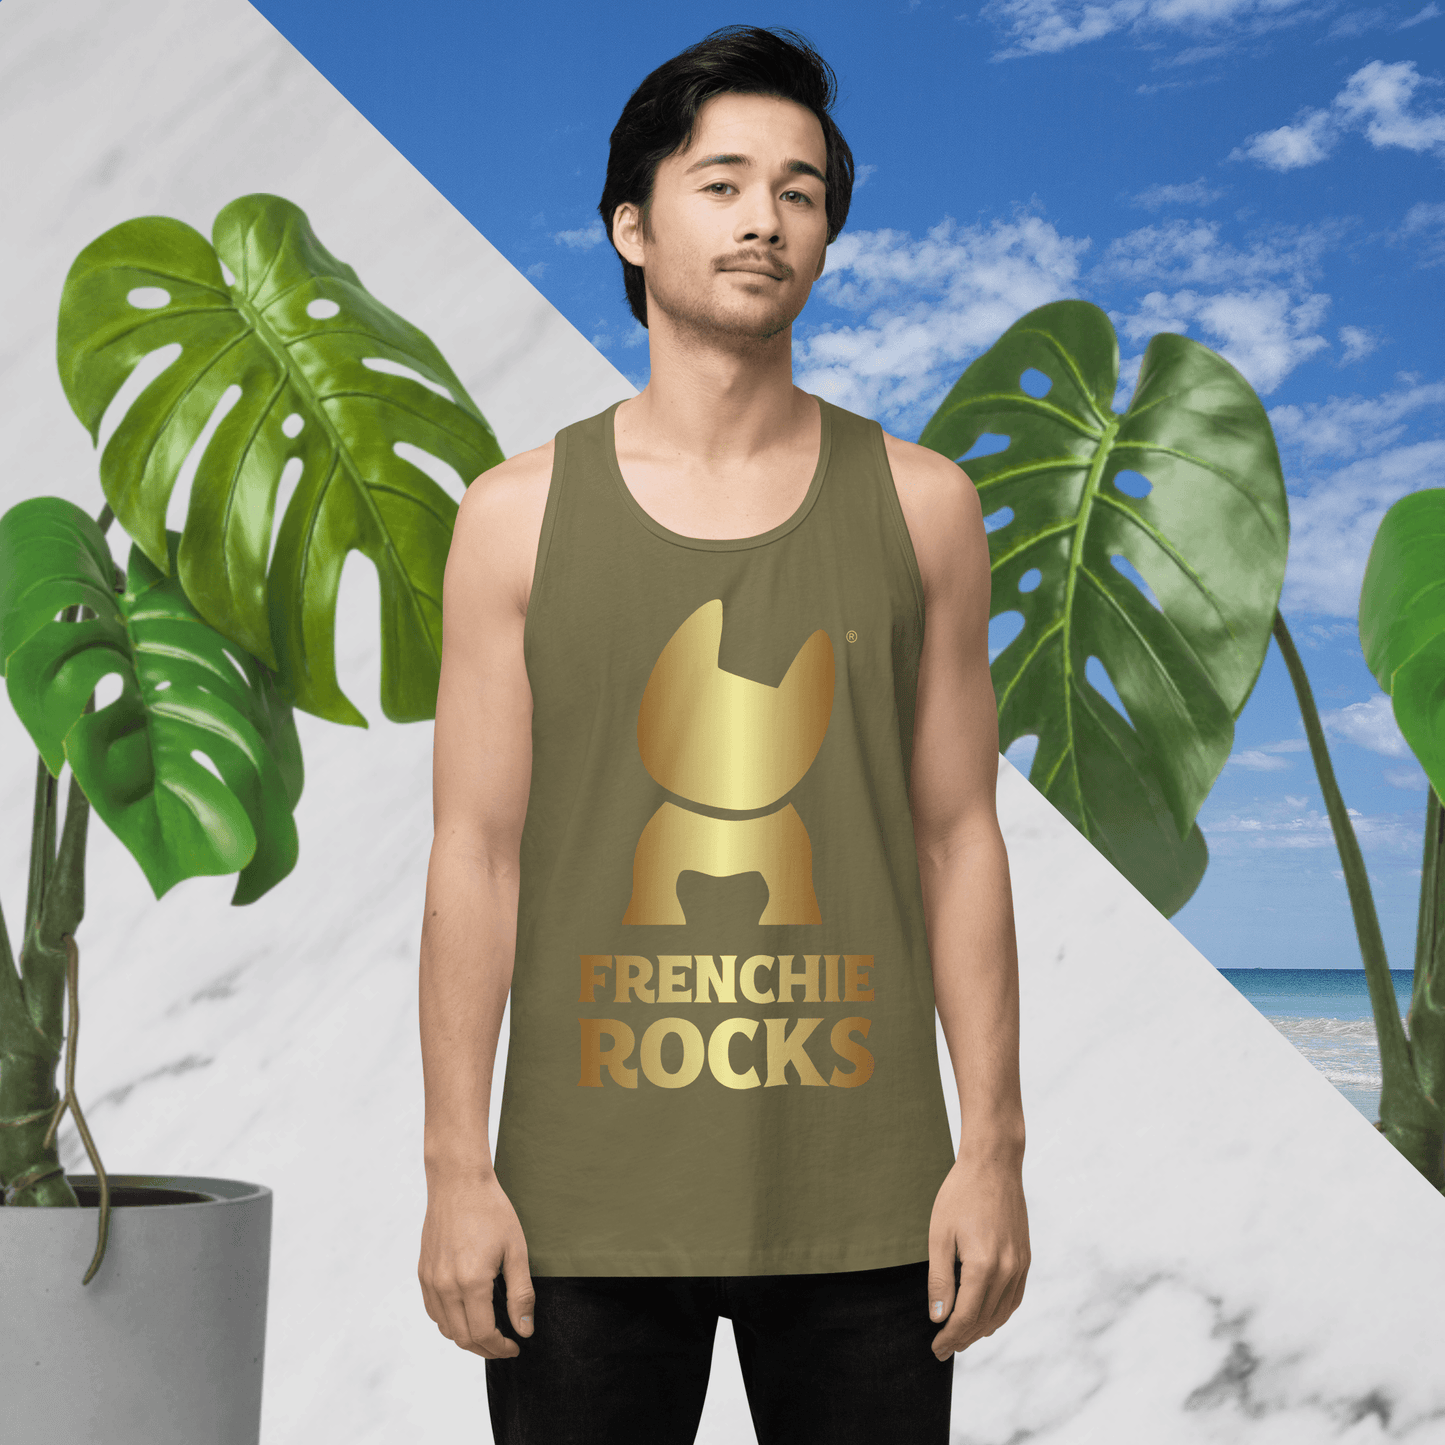 Frenchie Rocks Tank Top - Frenchie Rocks